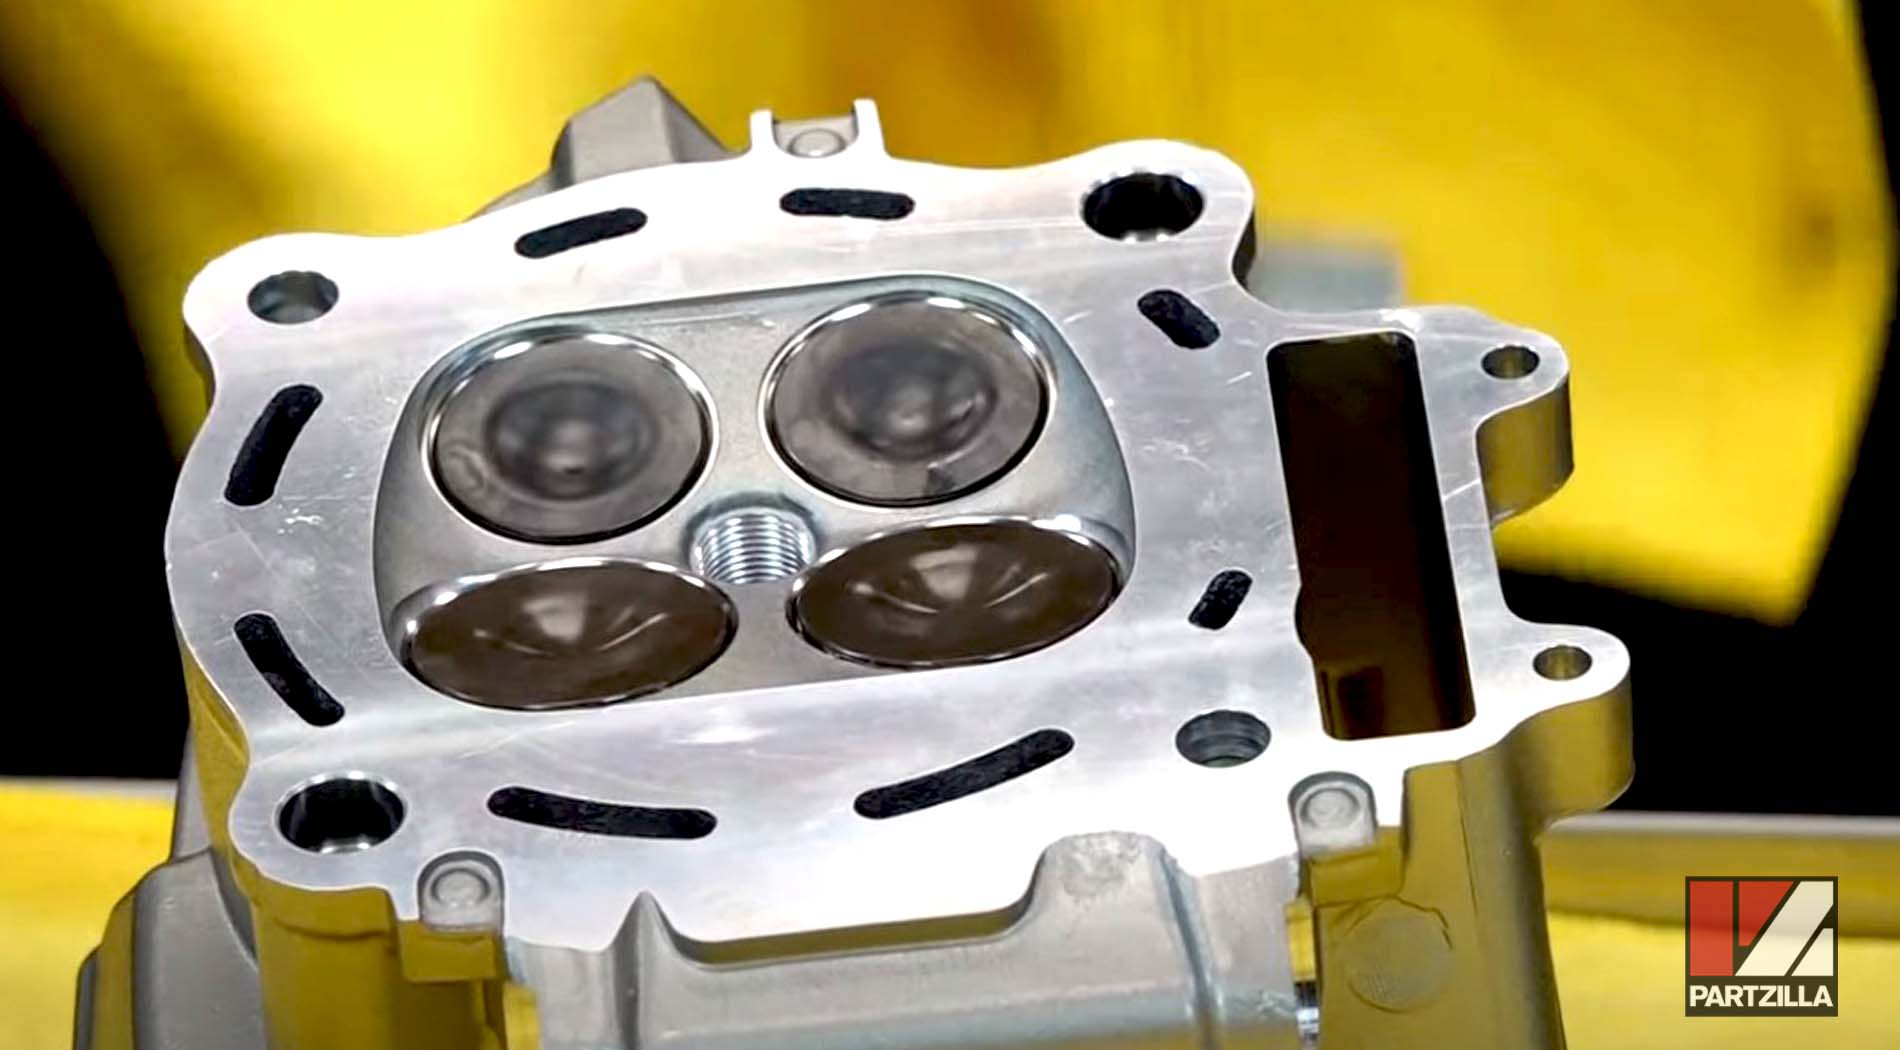 Honda CRF450 engine valves springs installed